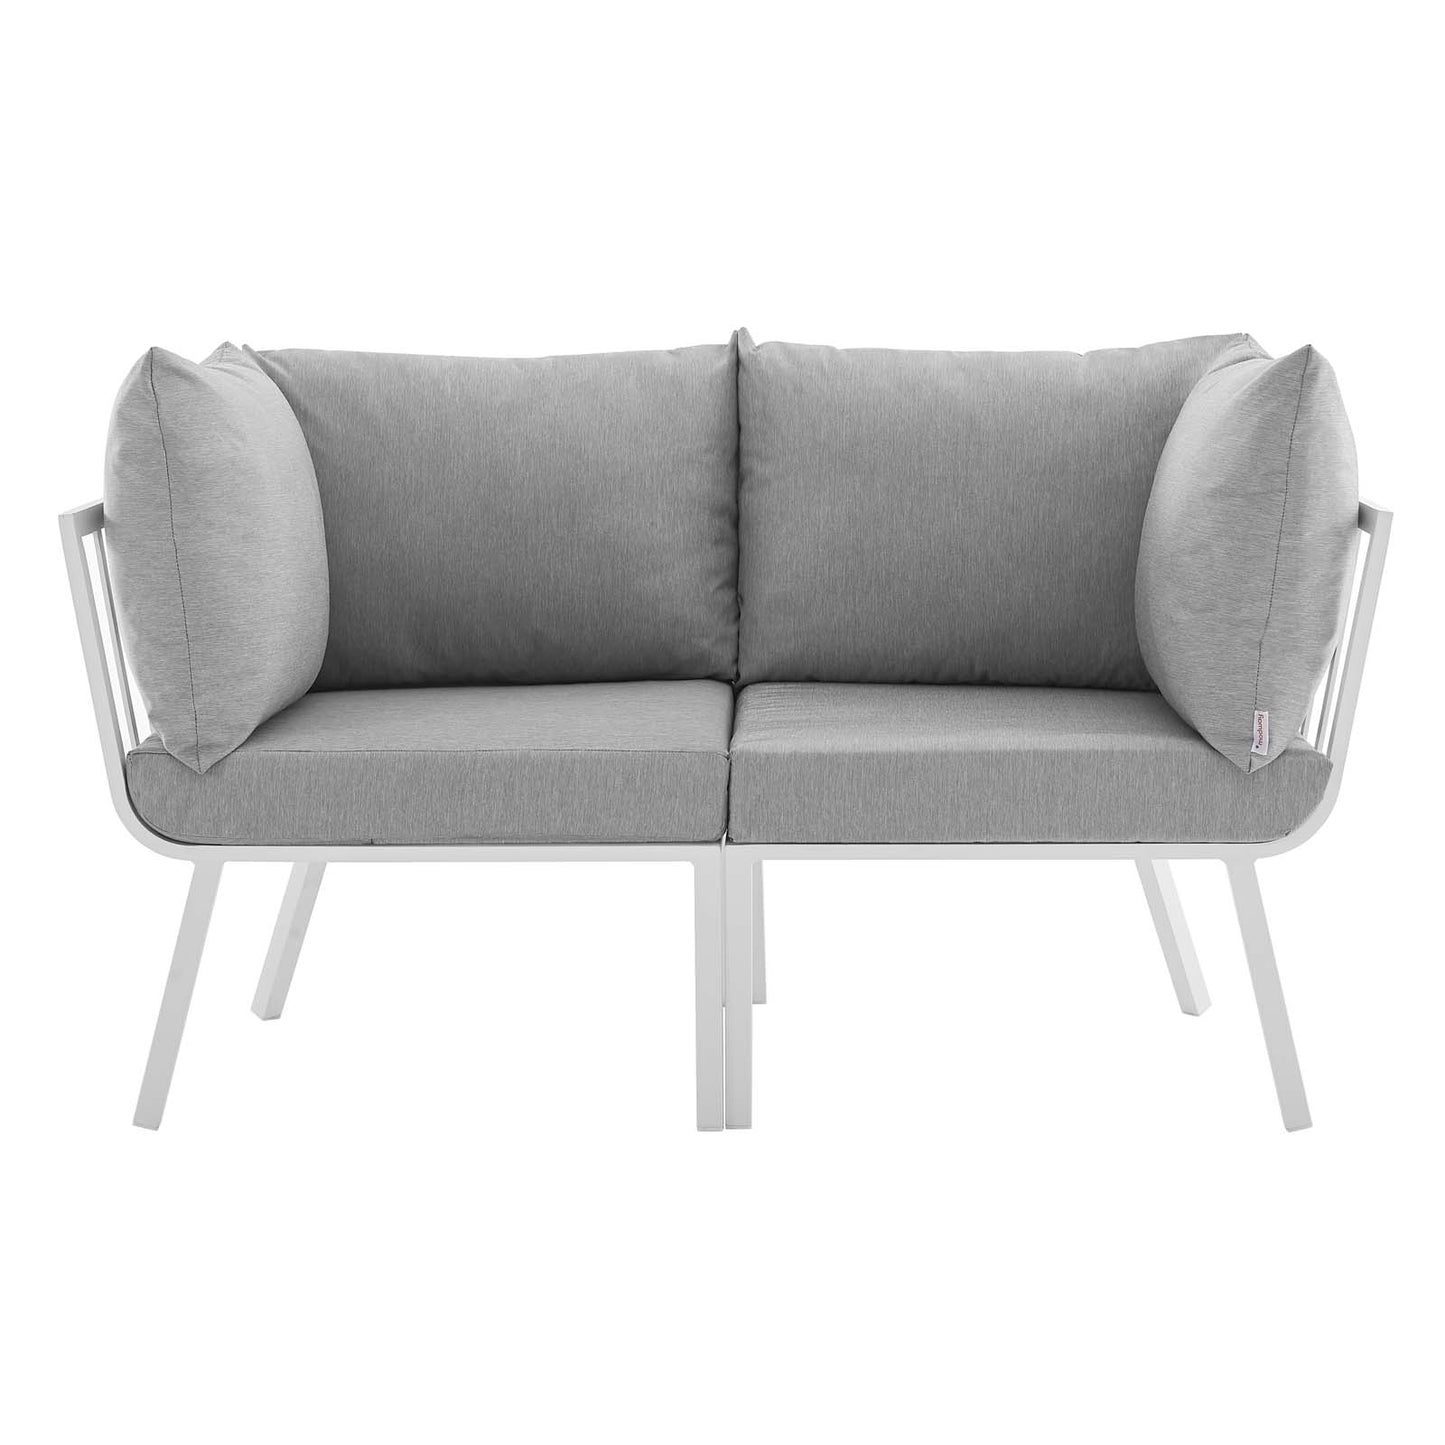 Riverside 2 Piece Outdoor Patio Aluminum Sectional Sofa Set White Gray EEI-3781-WHI-GRY